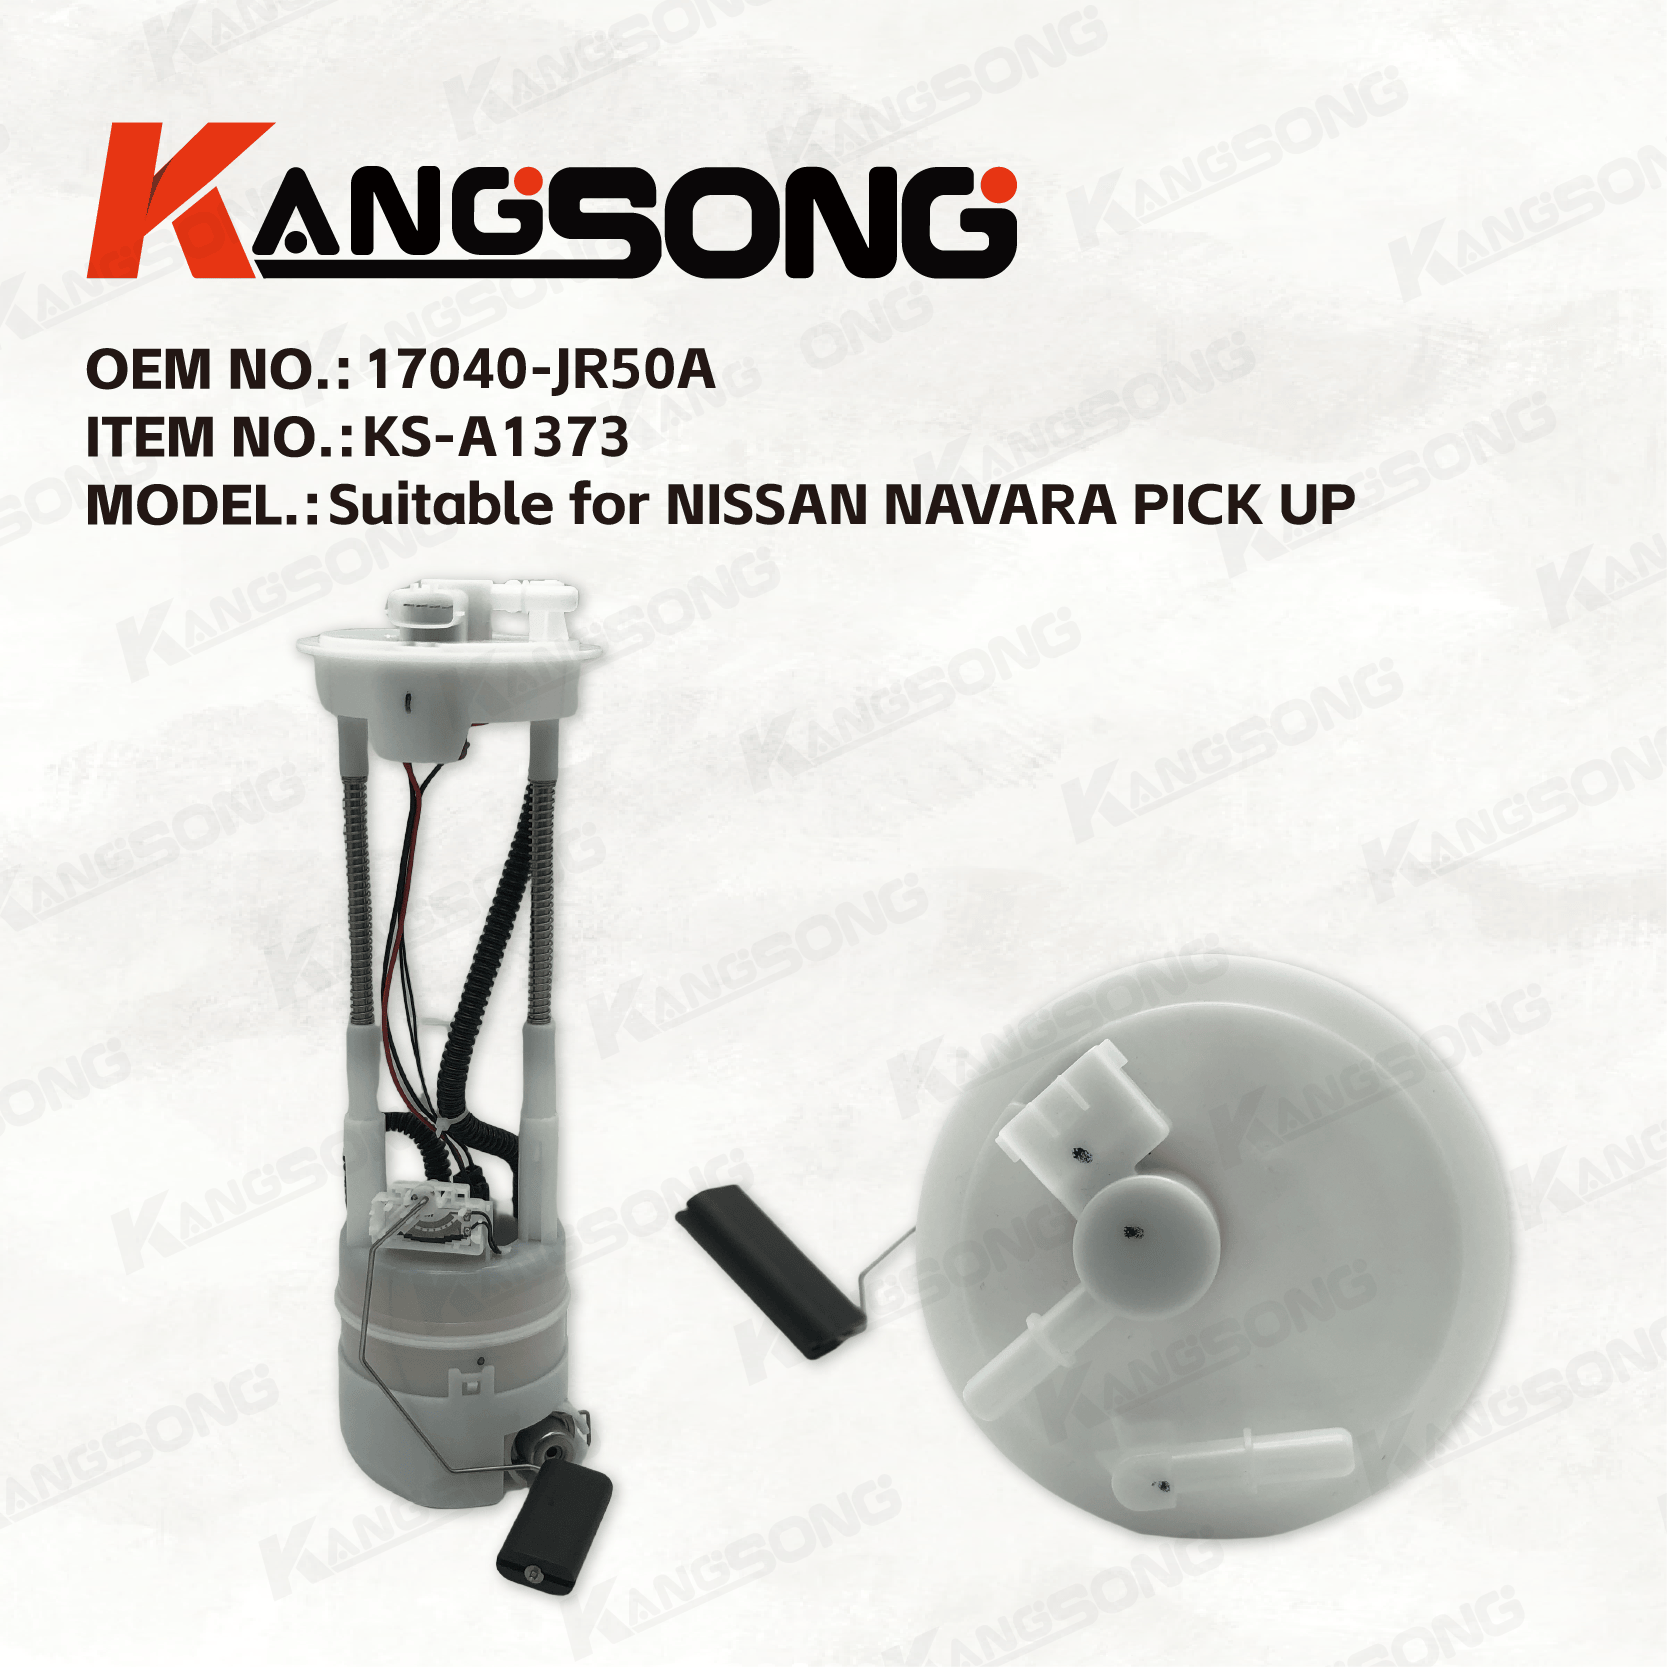 Applicable to Nissan Navara/17040-JR50A/Fuel Pump Assembly/KS-A1373